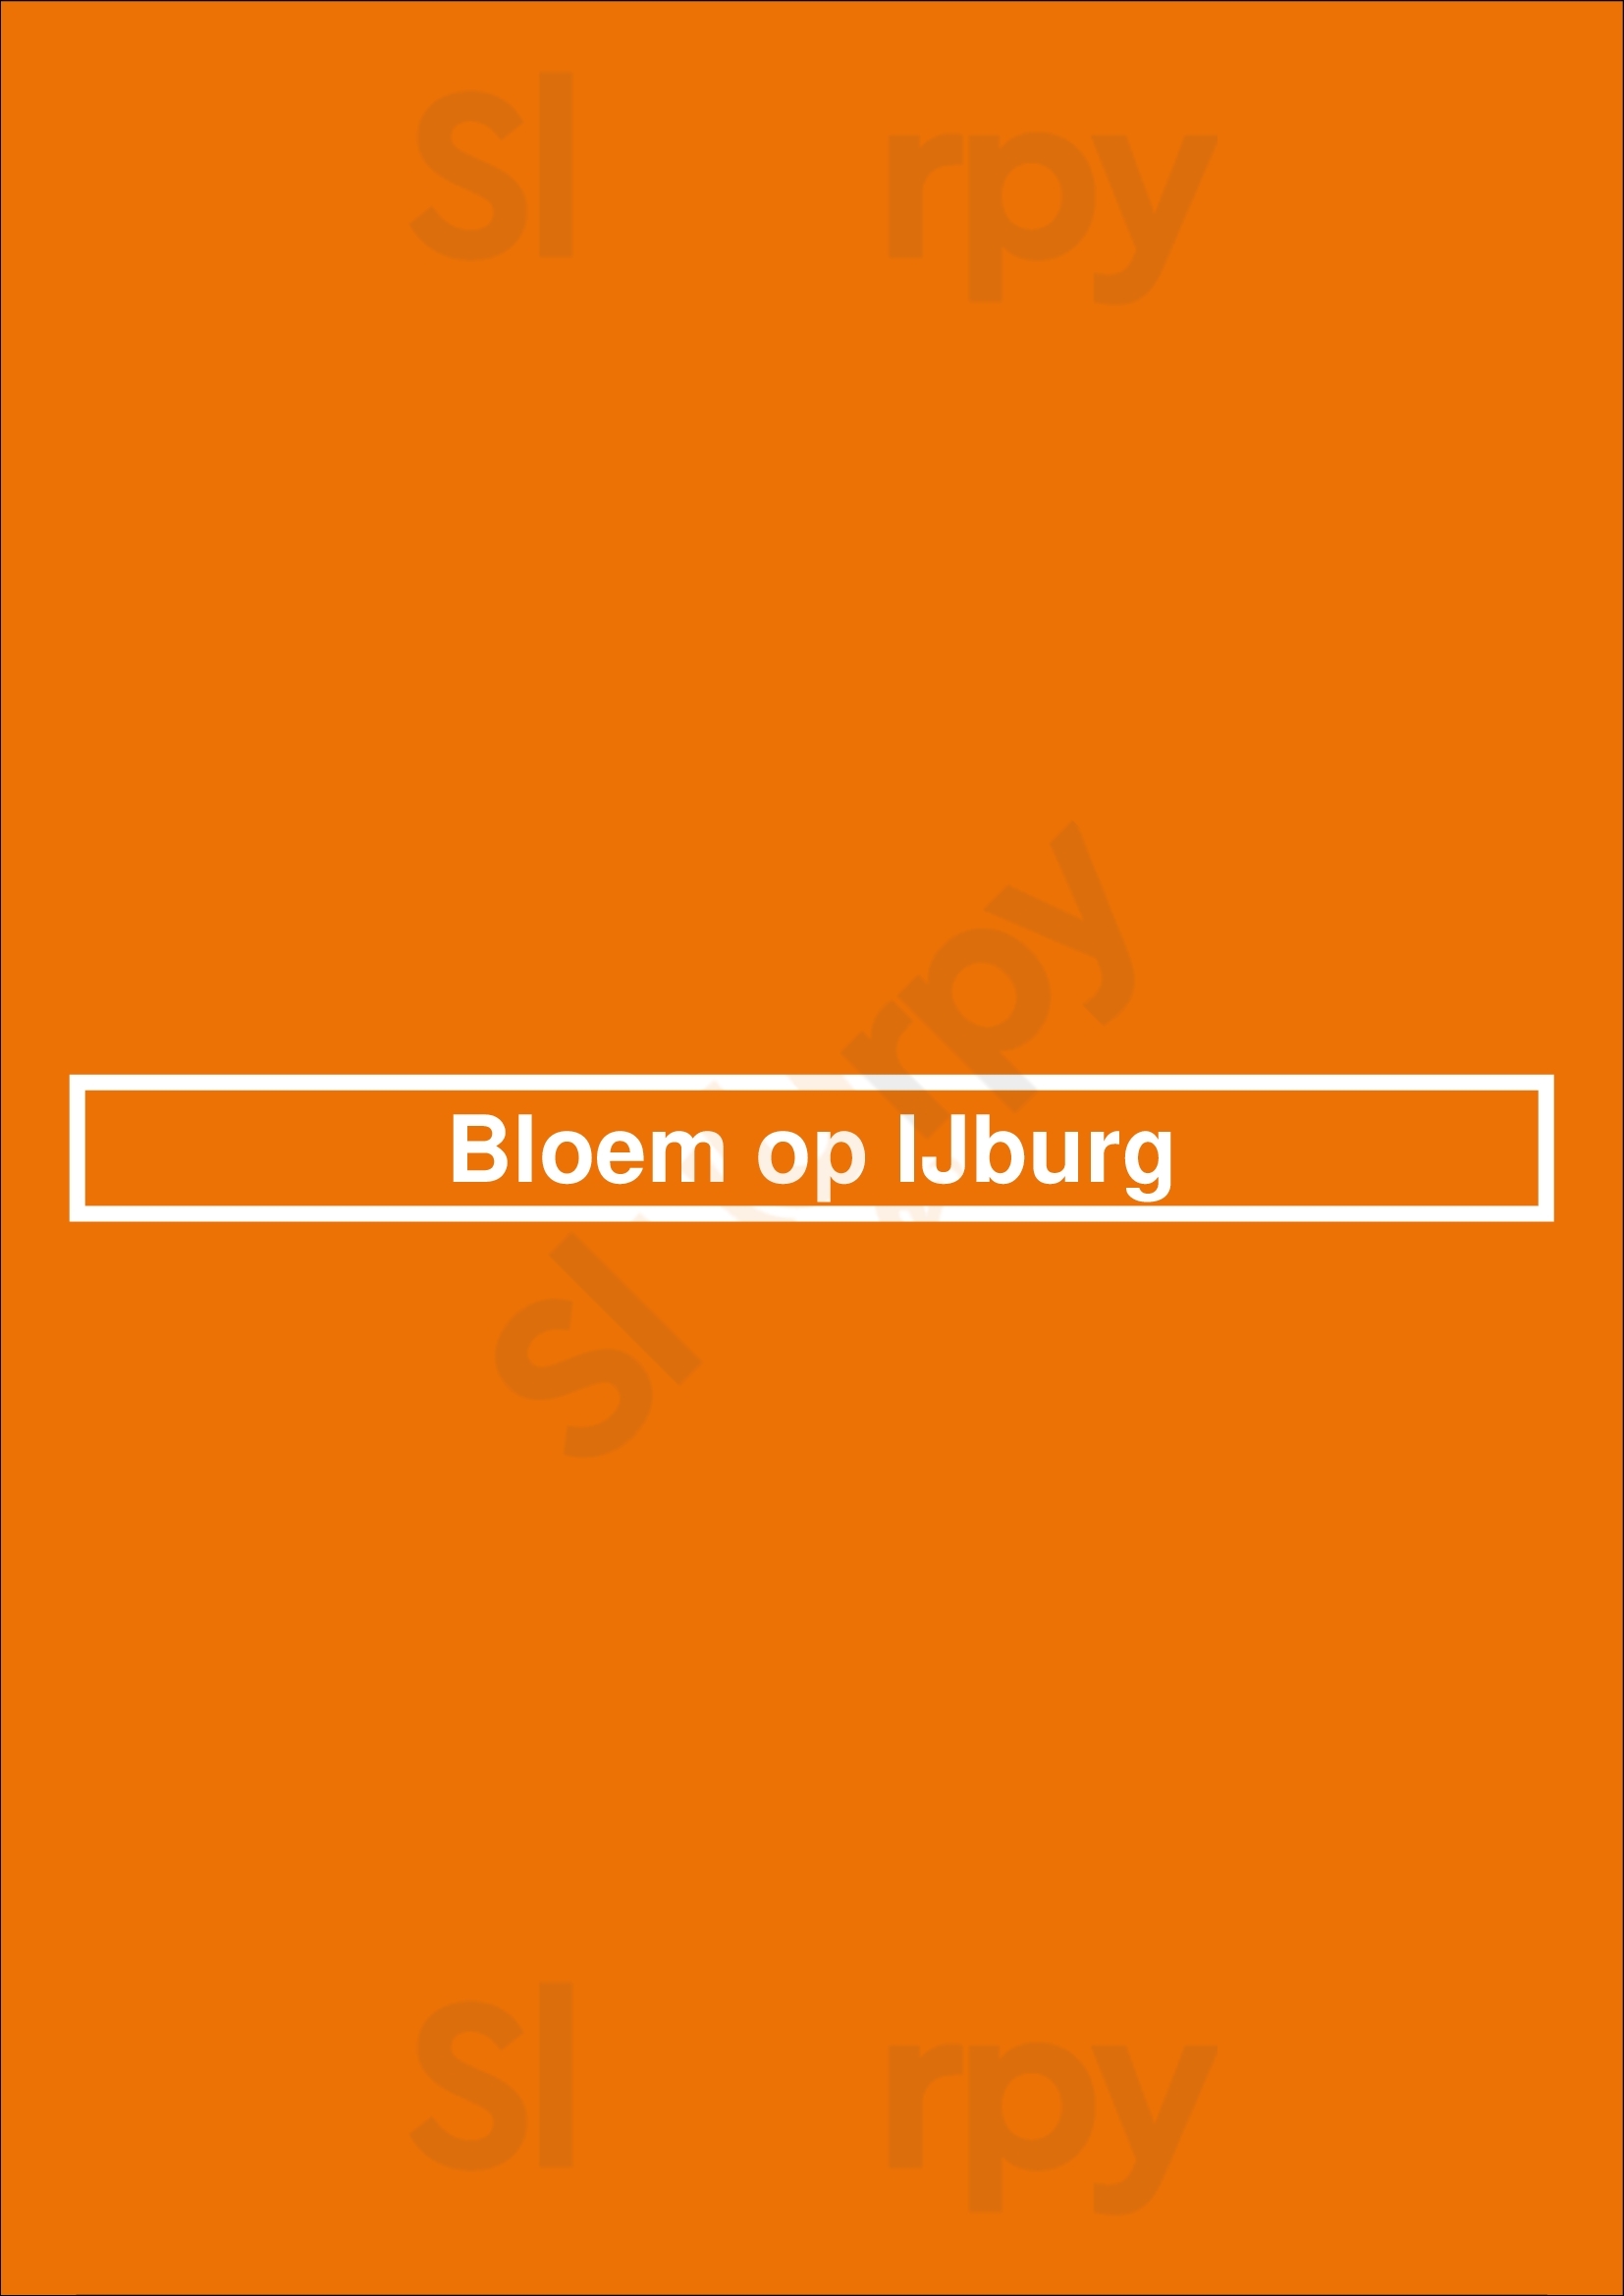 Bloem Op Ijburg Amsterdam Menu - 1